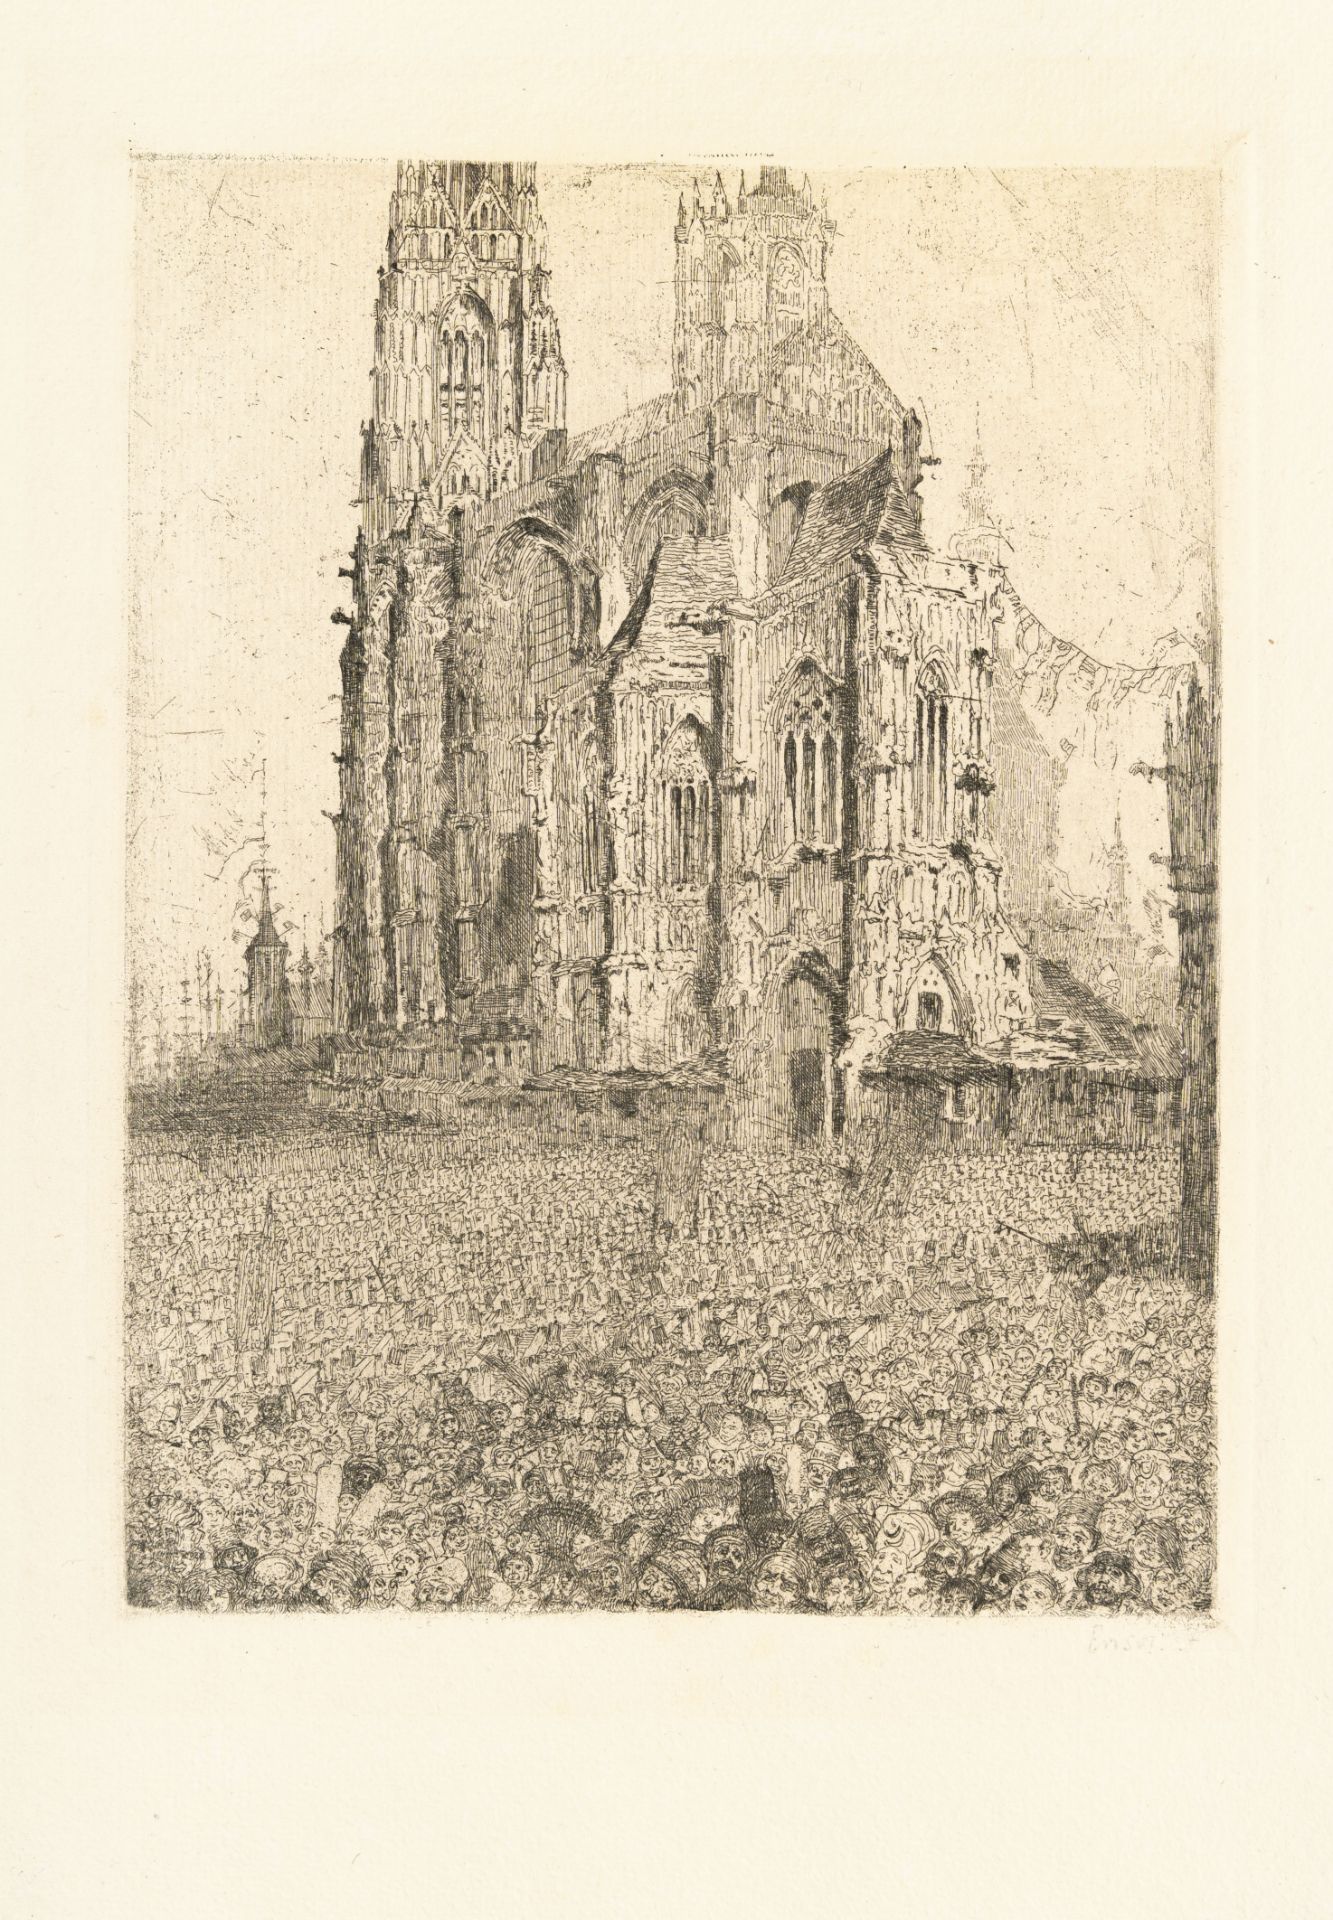 James Ensor, La Cathédrale.Etching on cream laid paper by Van Gelder. (1886). Ca. 23.5 x 17.5 cm (